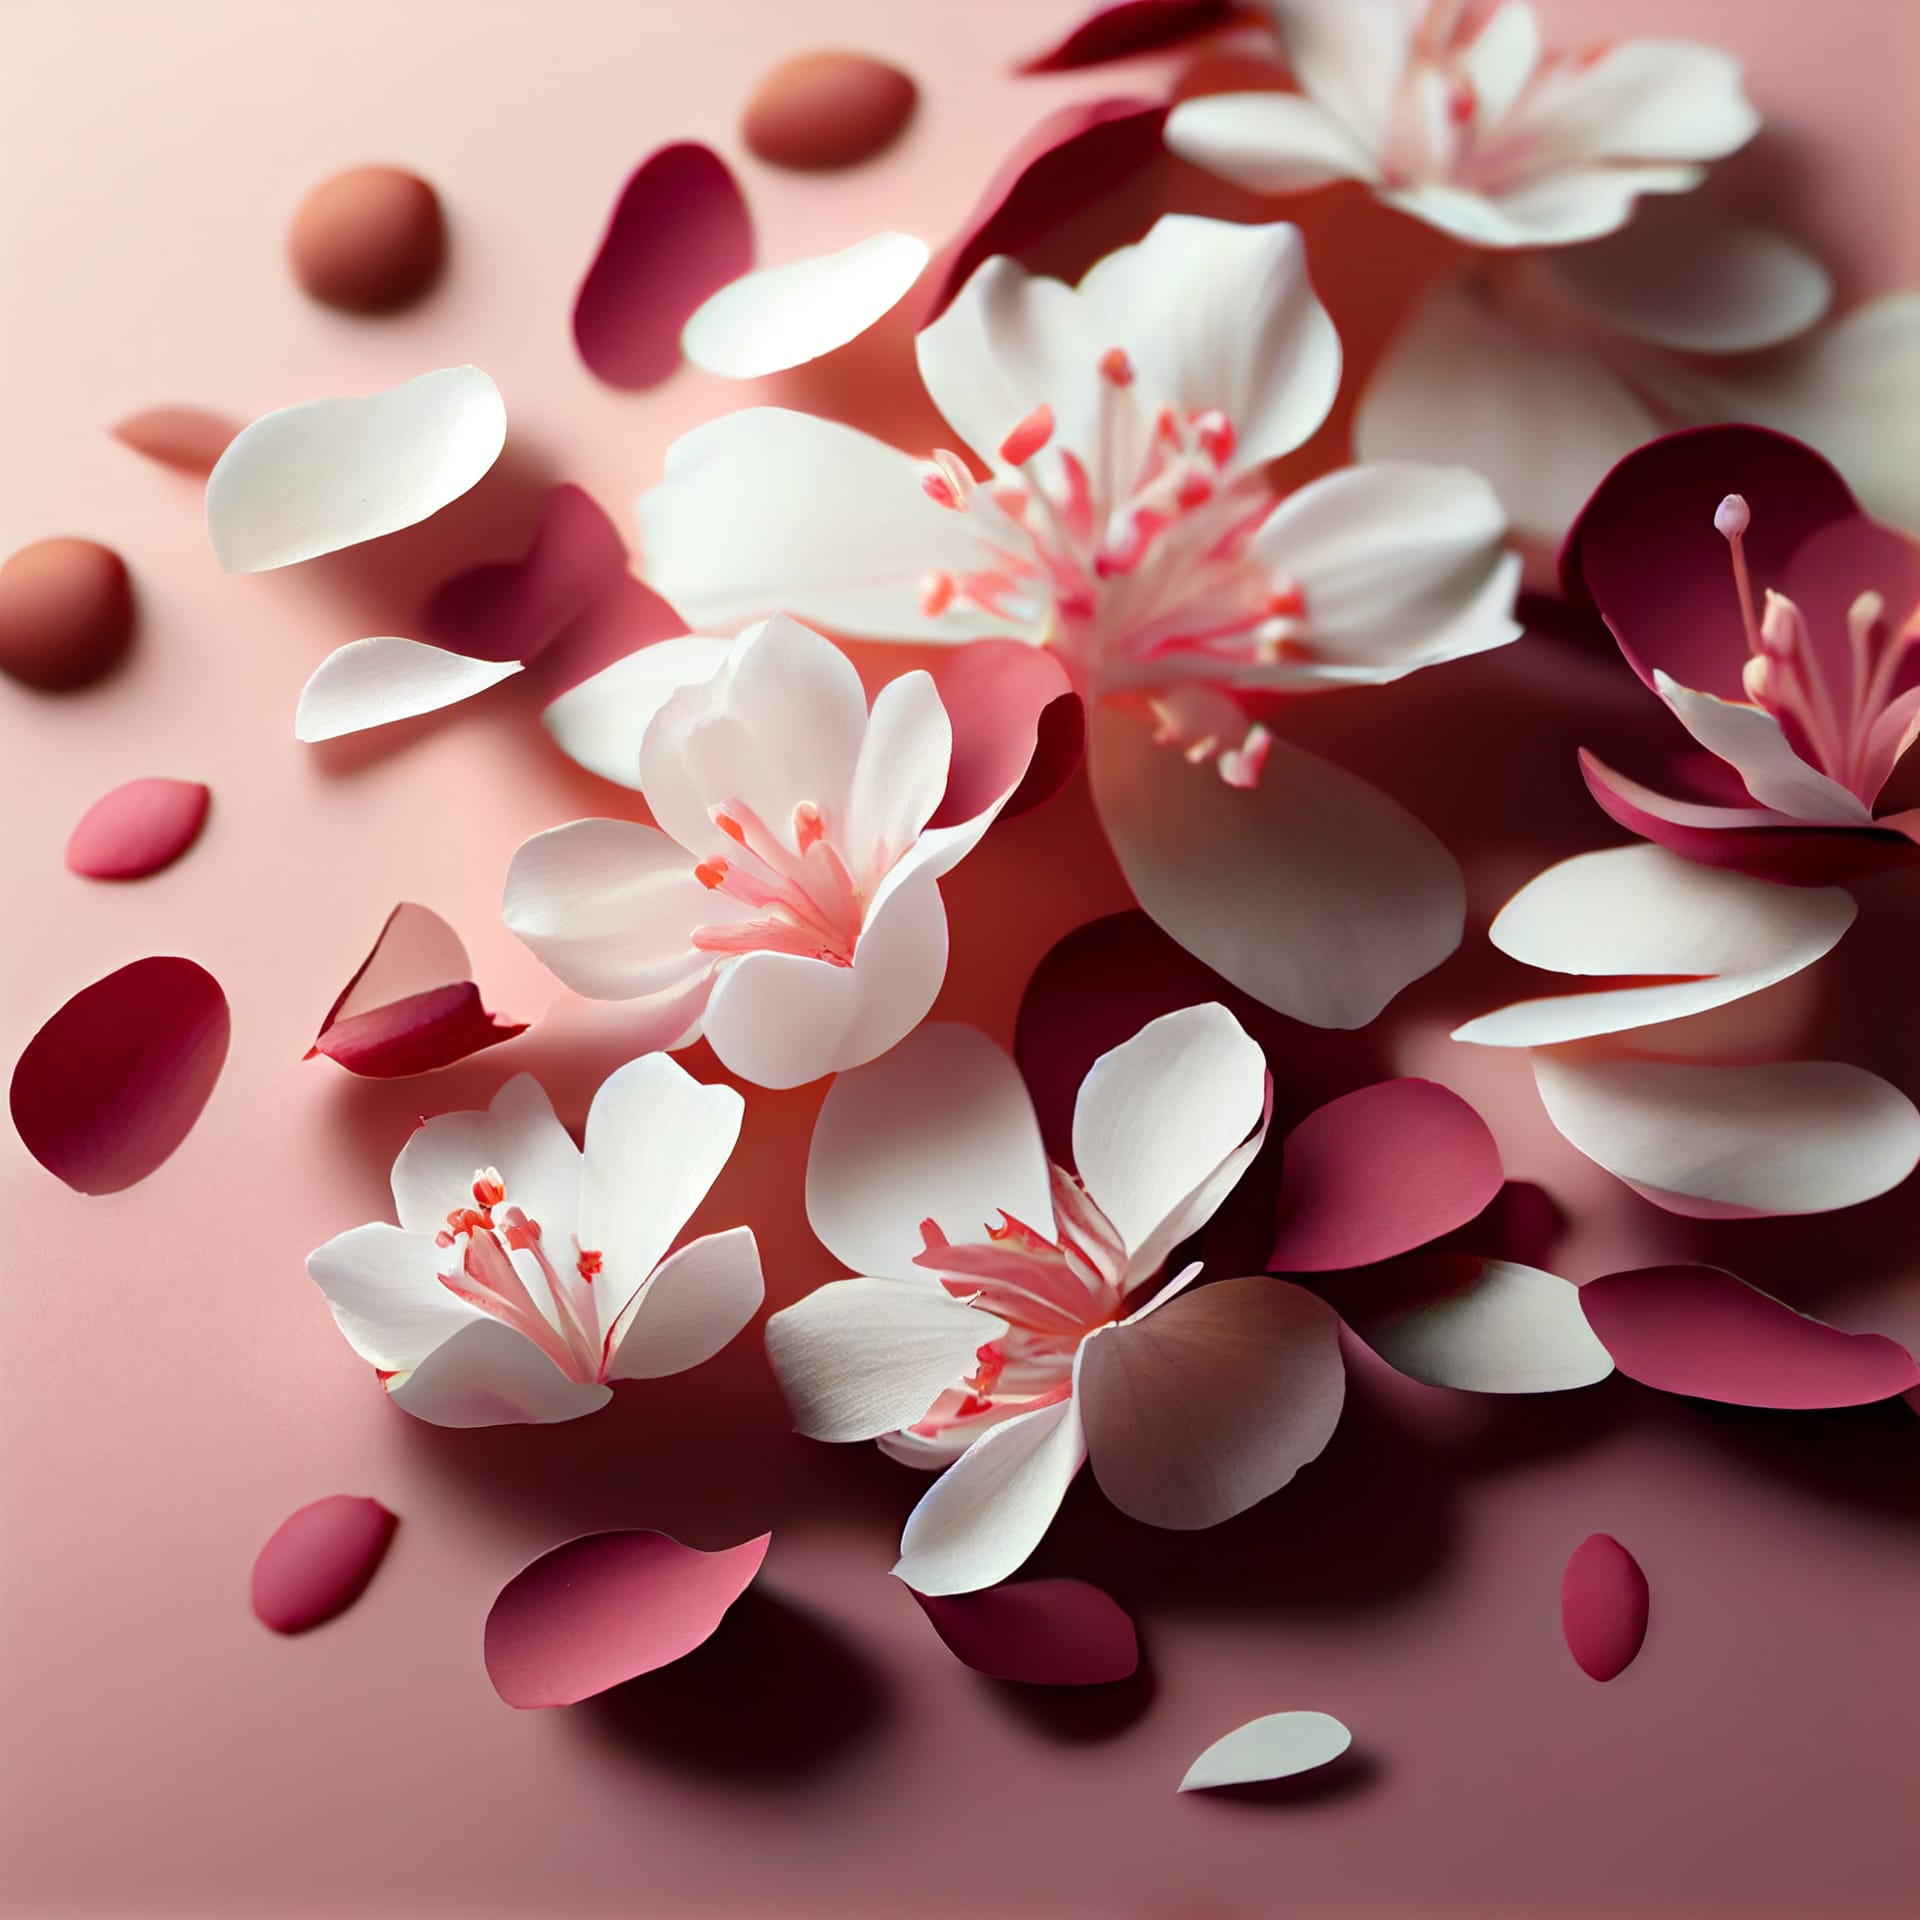 Cherry blossom sakura pink flowers petals floral illustration excellent image